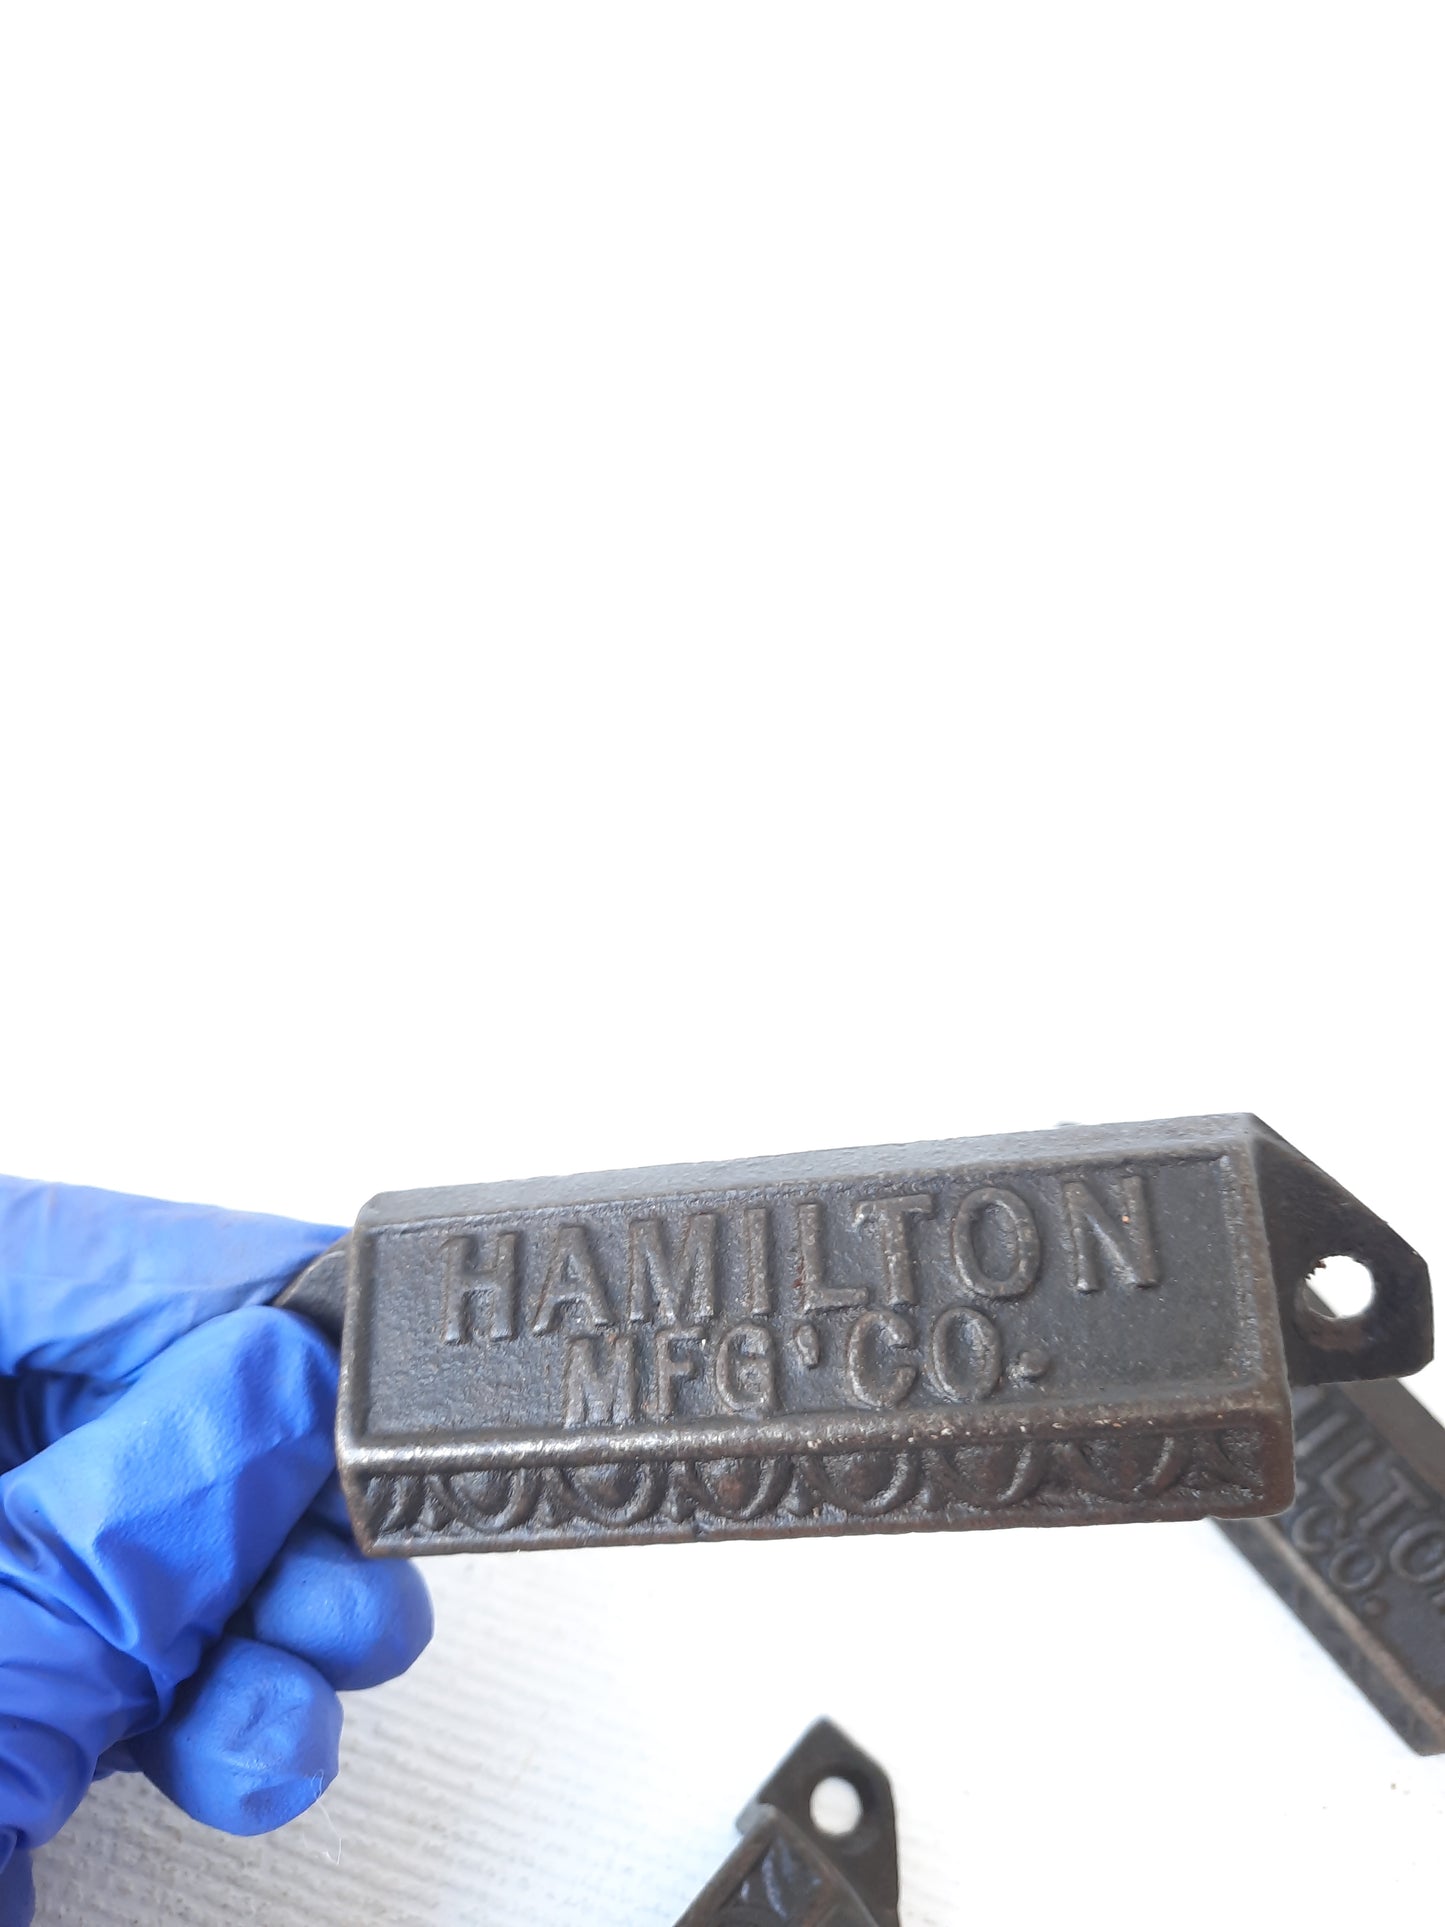 Three "Hamilton" Cast Iron Type Setter Drawer Pulls or Handles